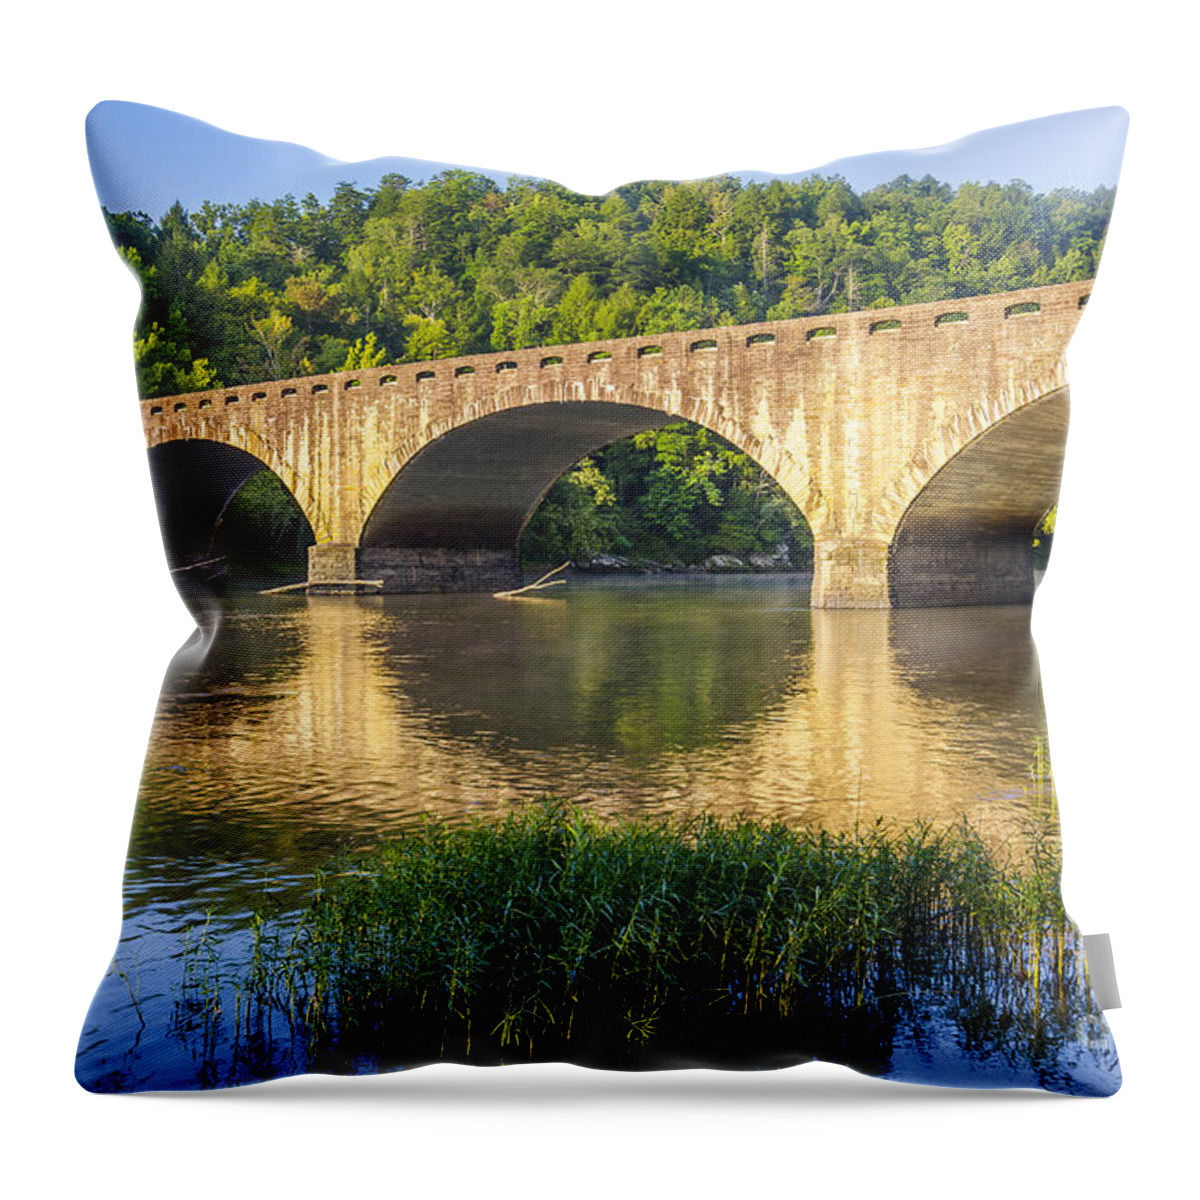 Gatliff Bridge Throw Pillow featuring the photograph Morning Gatliff by Anthony Heflin